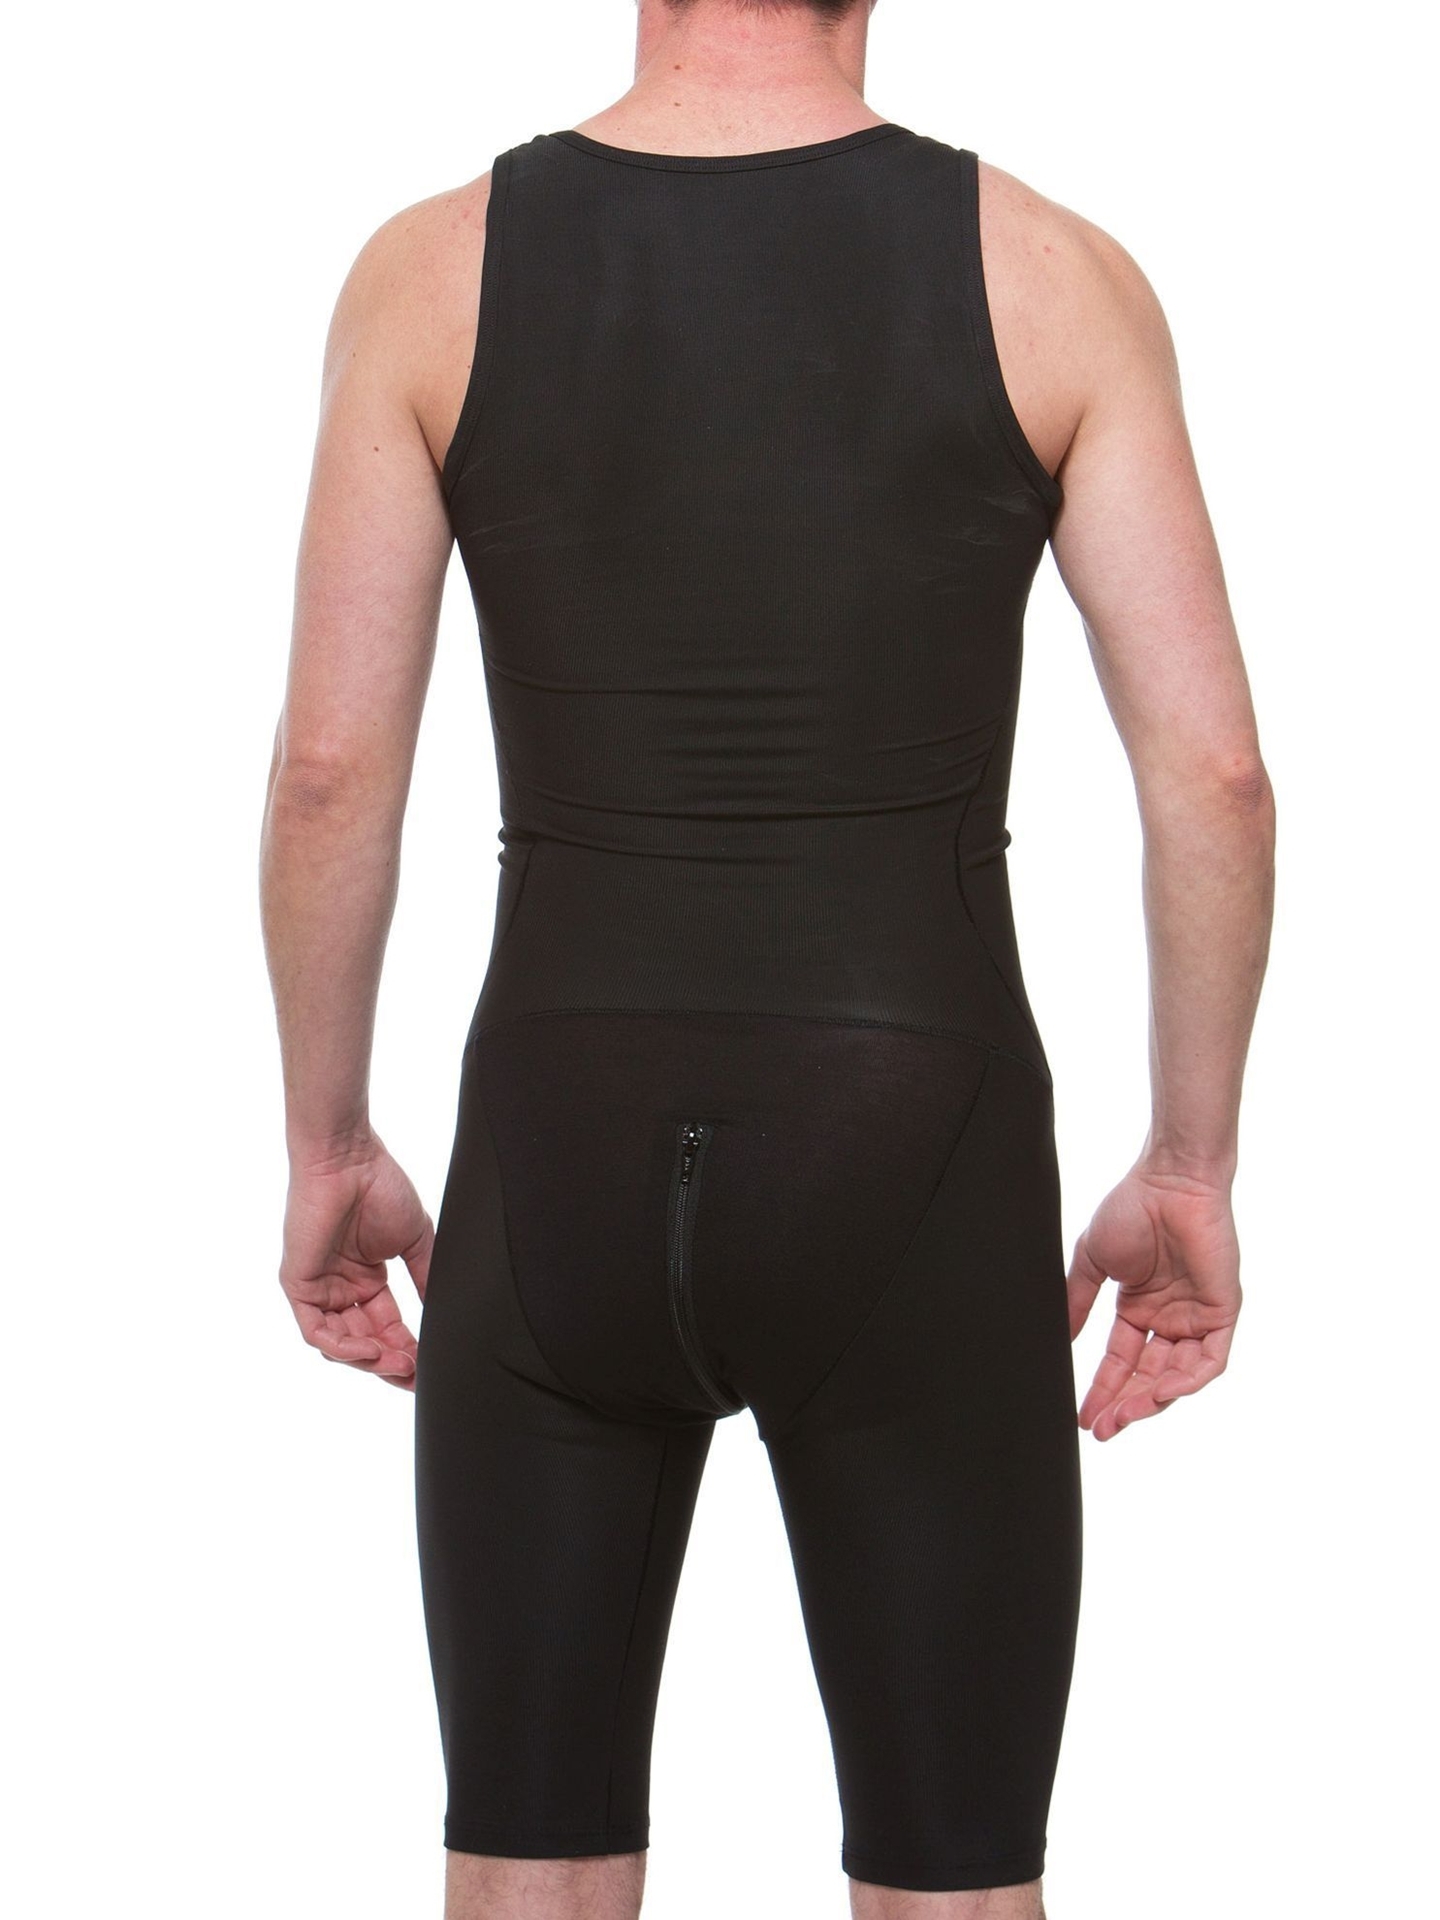 Compression Bodysuit for Trans Men. FTM Chest Binders for Trans Men by ...